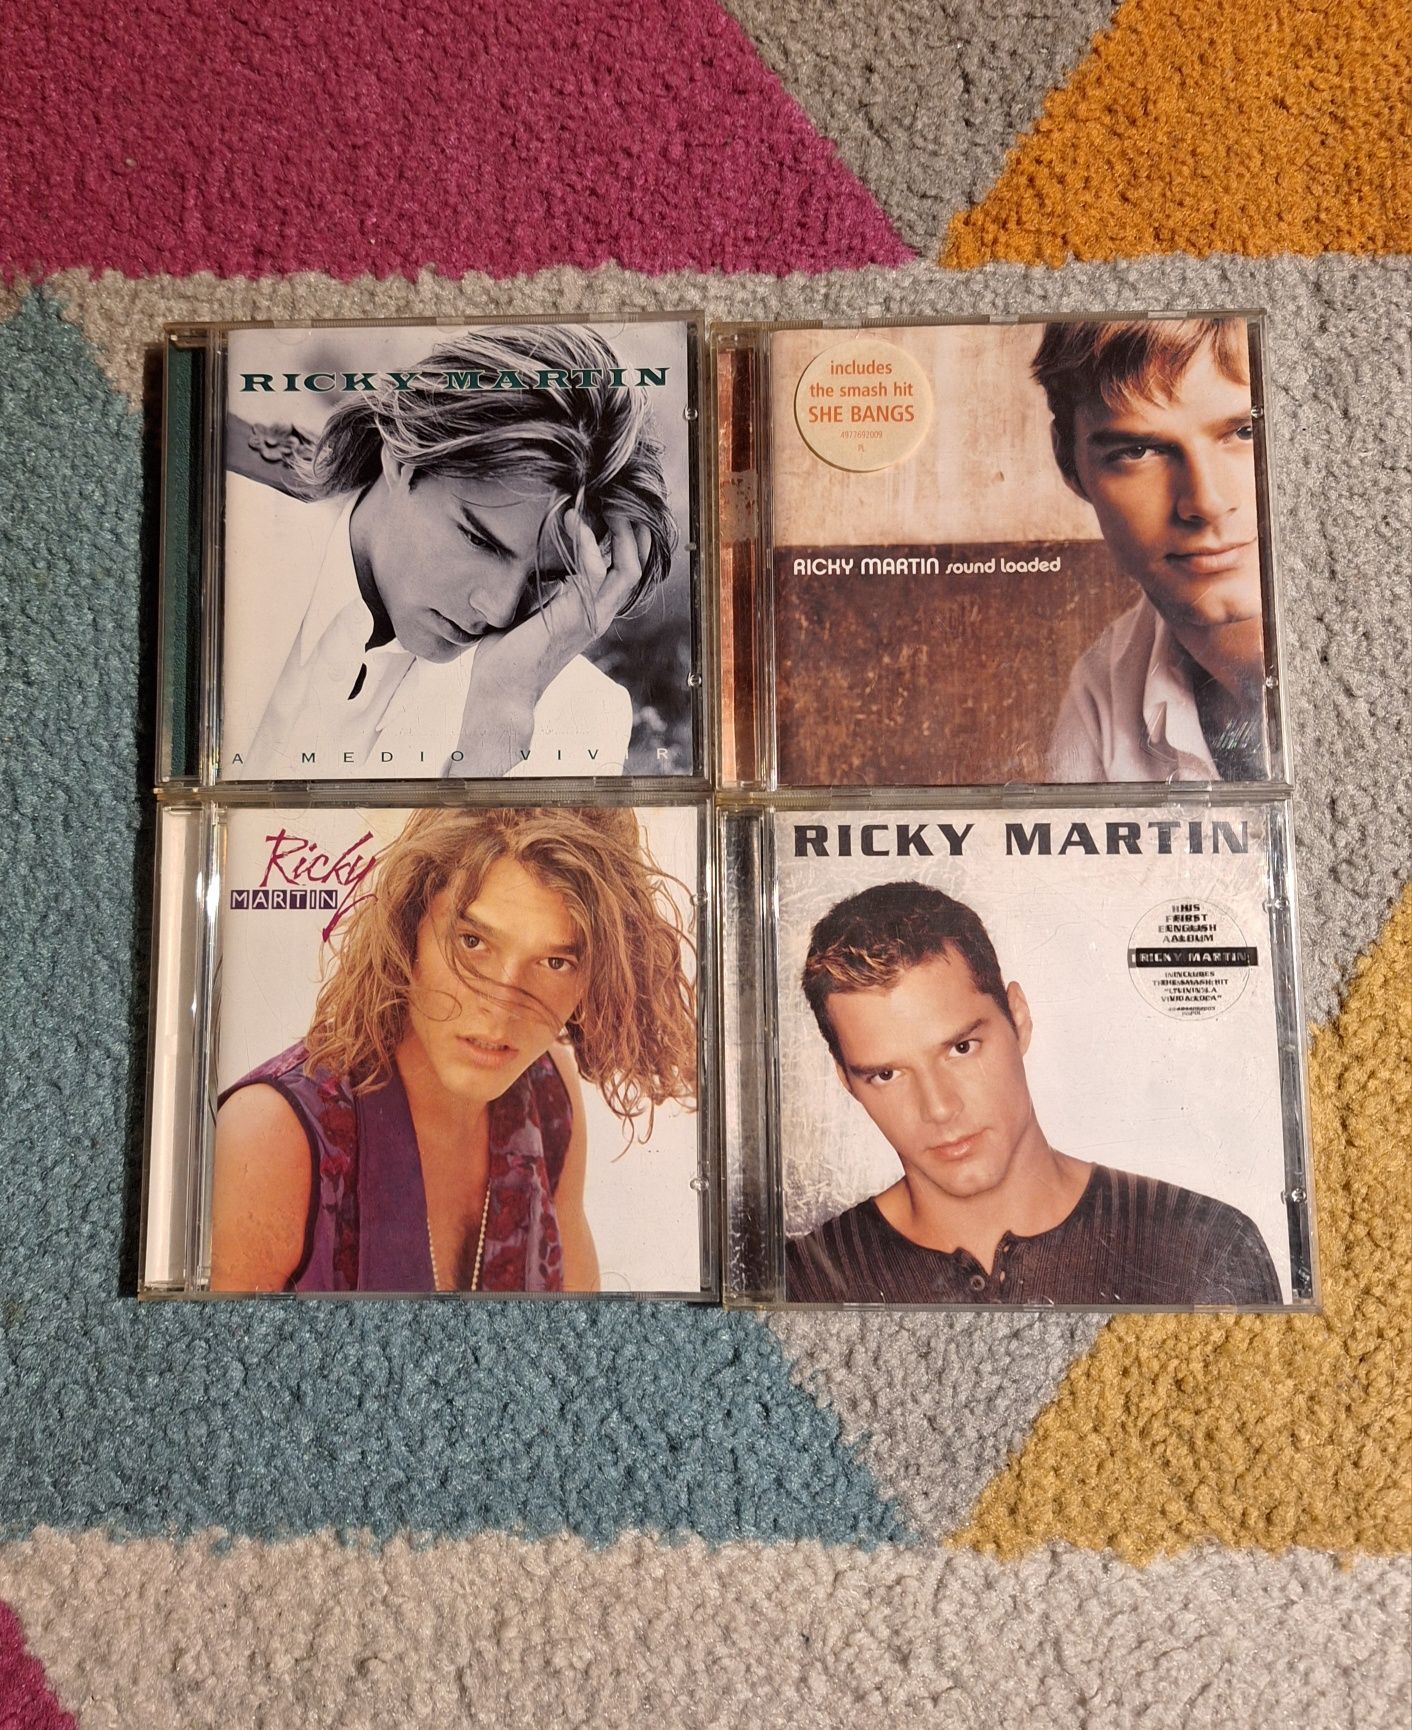 Płyty CD Ricky Martin, Sound loaded, A medio vivir zestaw